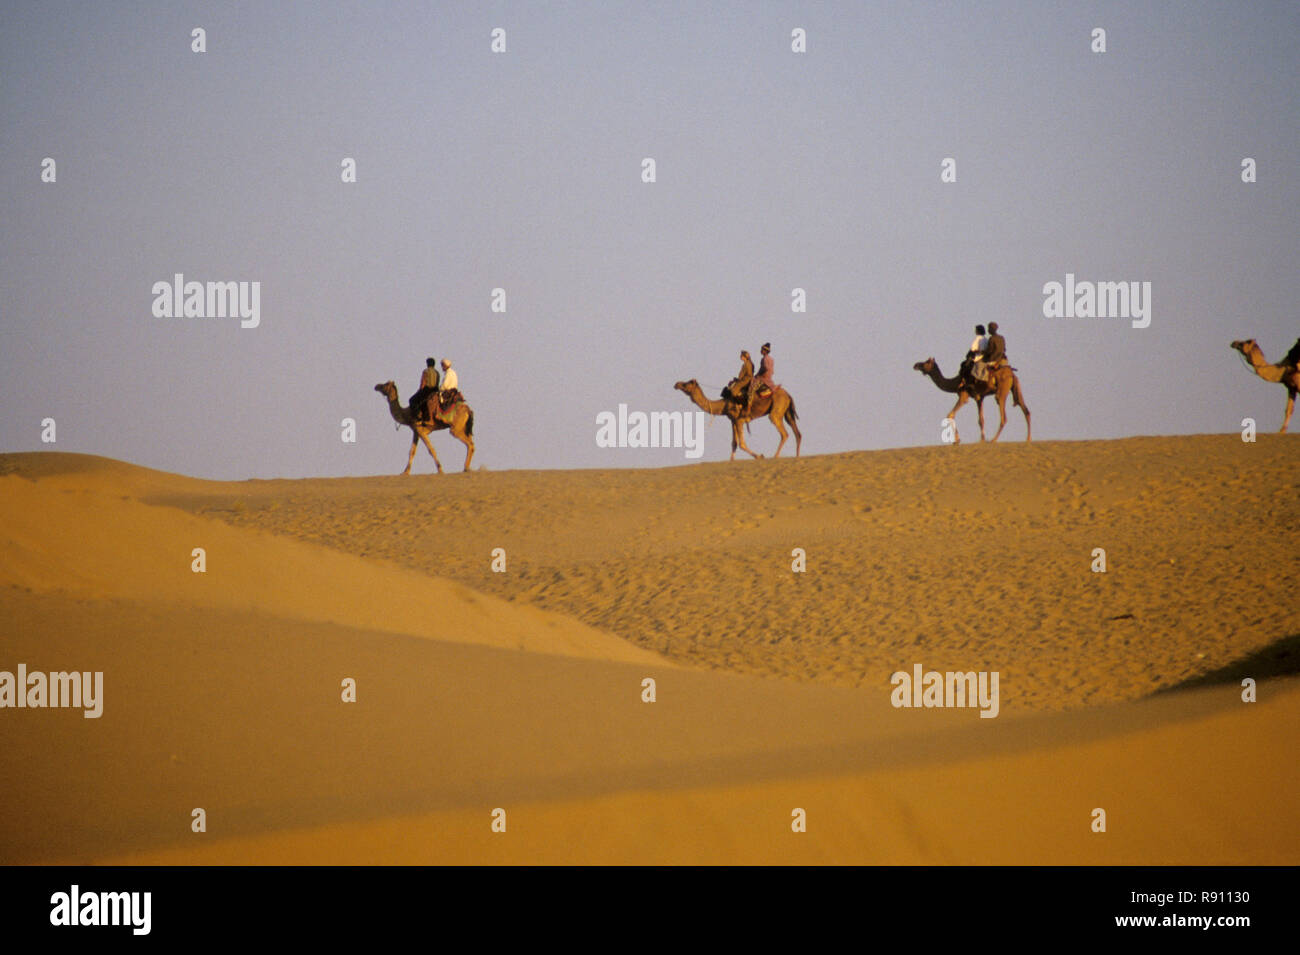 Camel Riding in Sand at Jaisalmer, Rajasthan, India Stock Photo